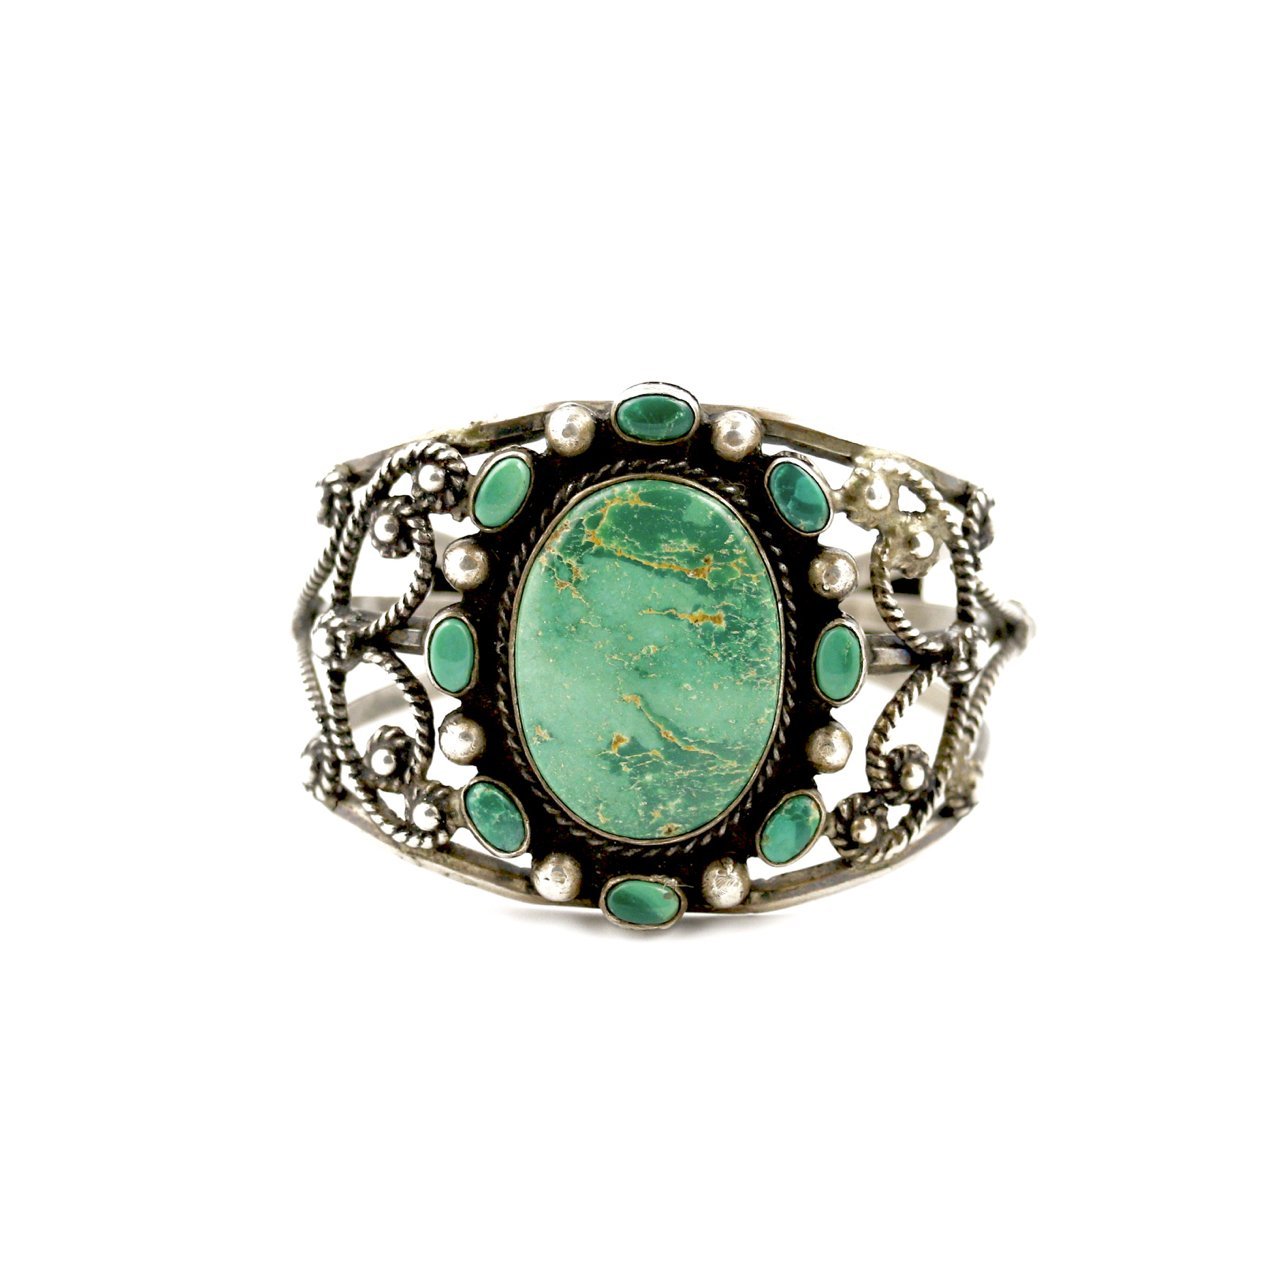 Exceptional 1950s Navajo Cuff - Kingdom Jewelry